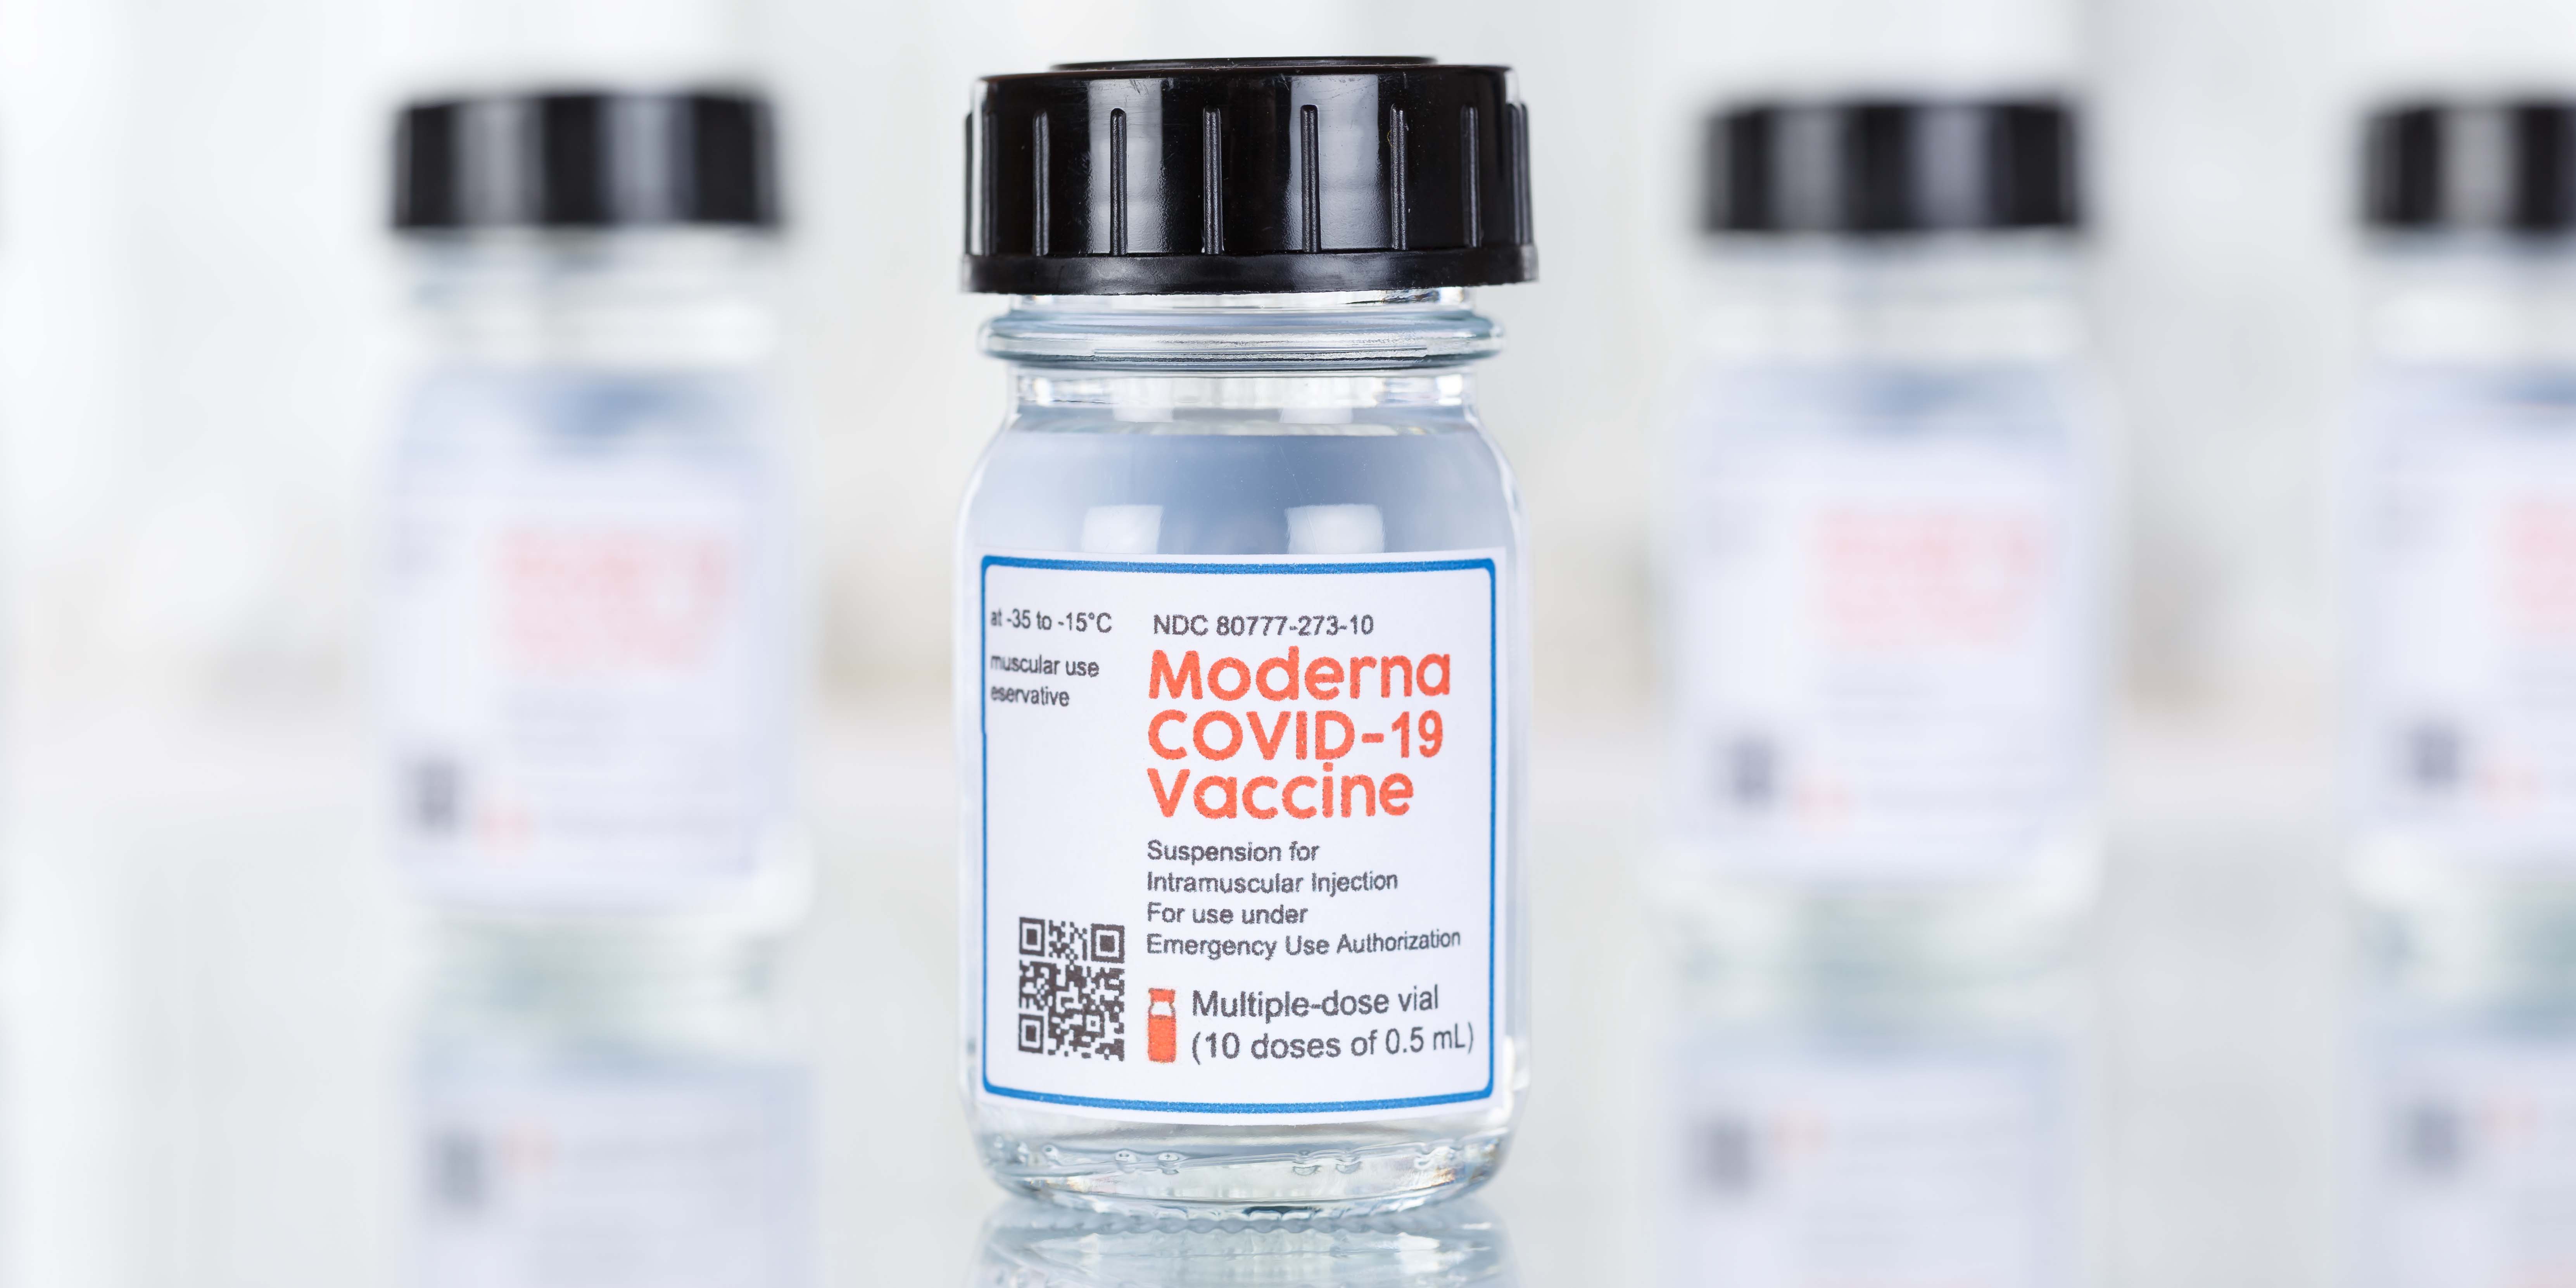 La vacuna de Moderna demostró tener una efectividad del 94,1%. (Foto: Adobe Stock)